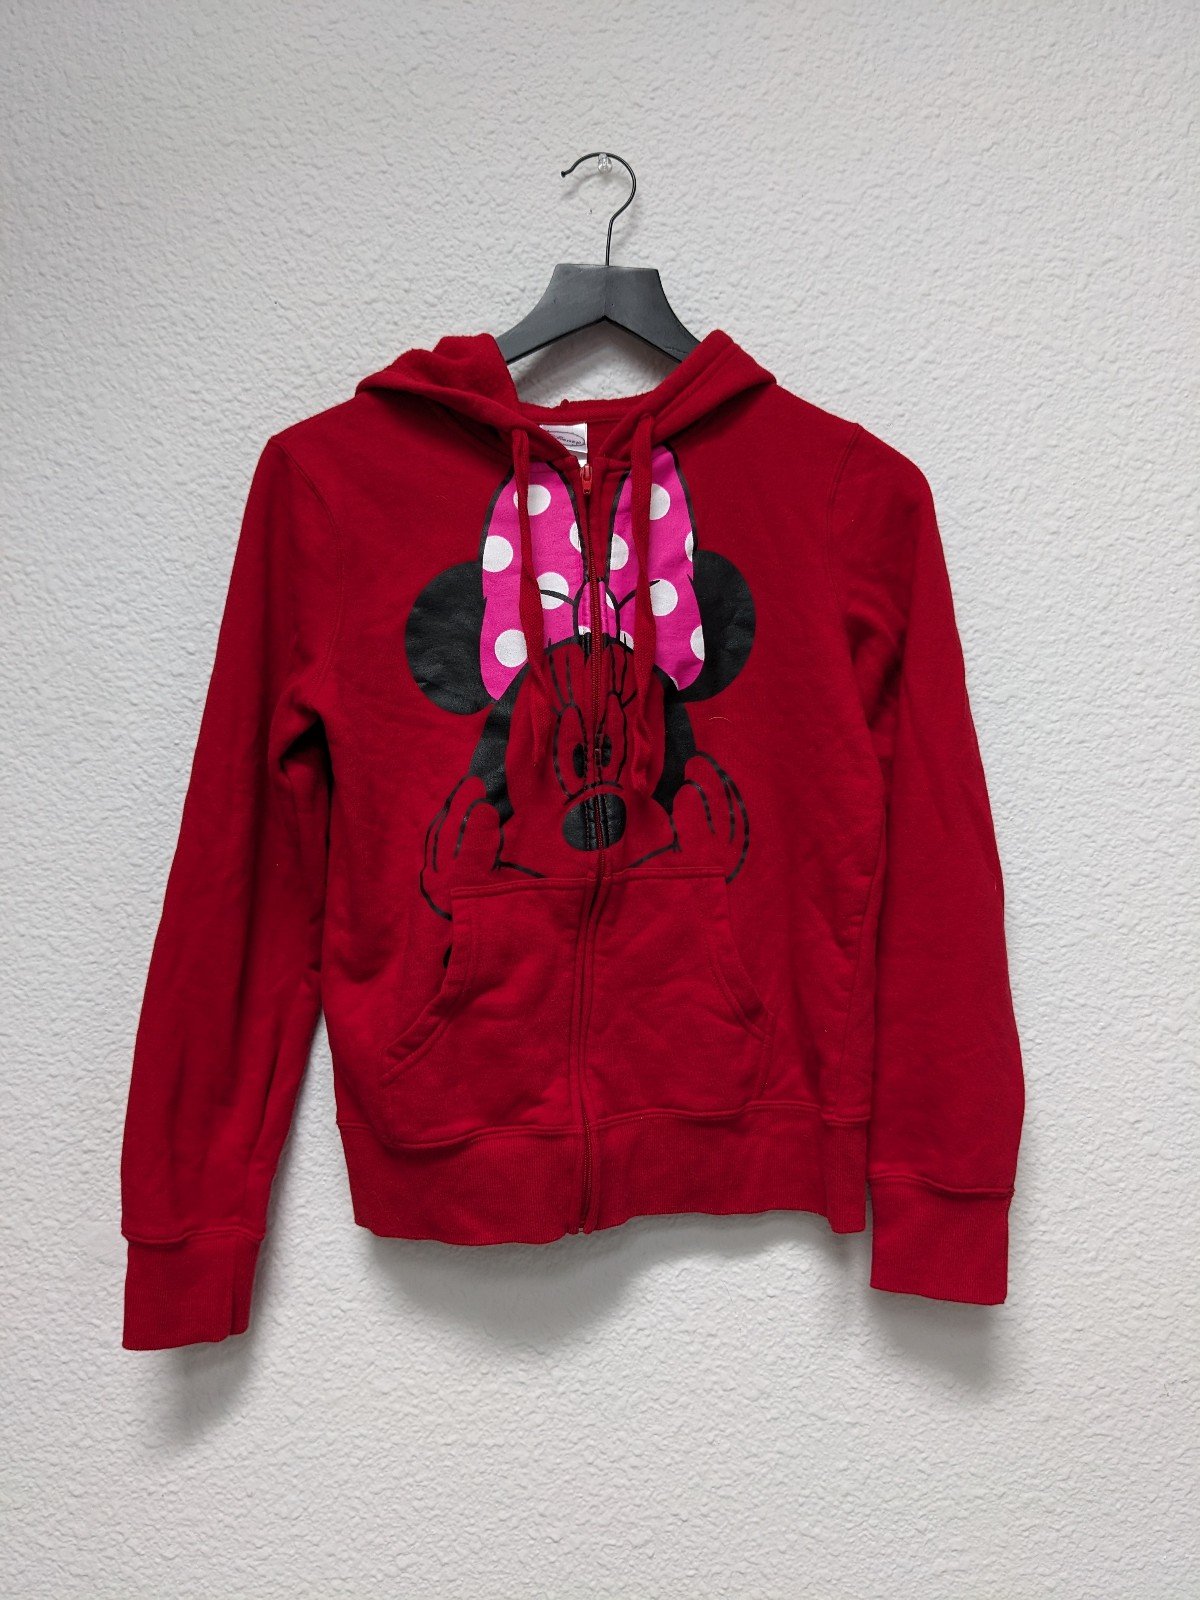 Simple Minnie Mouse Red Zipper Hoodie Juniors Medium 7/